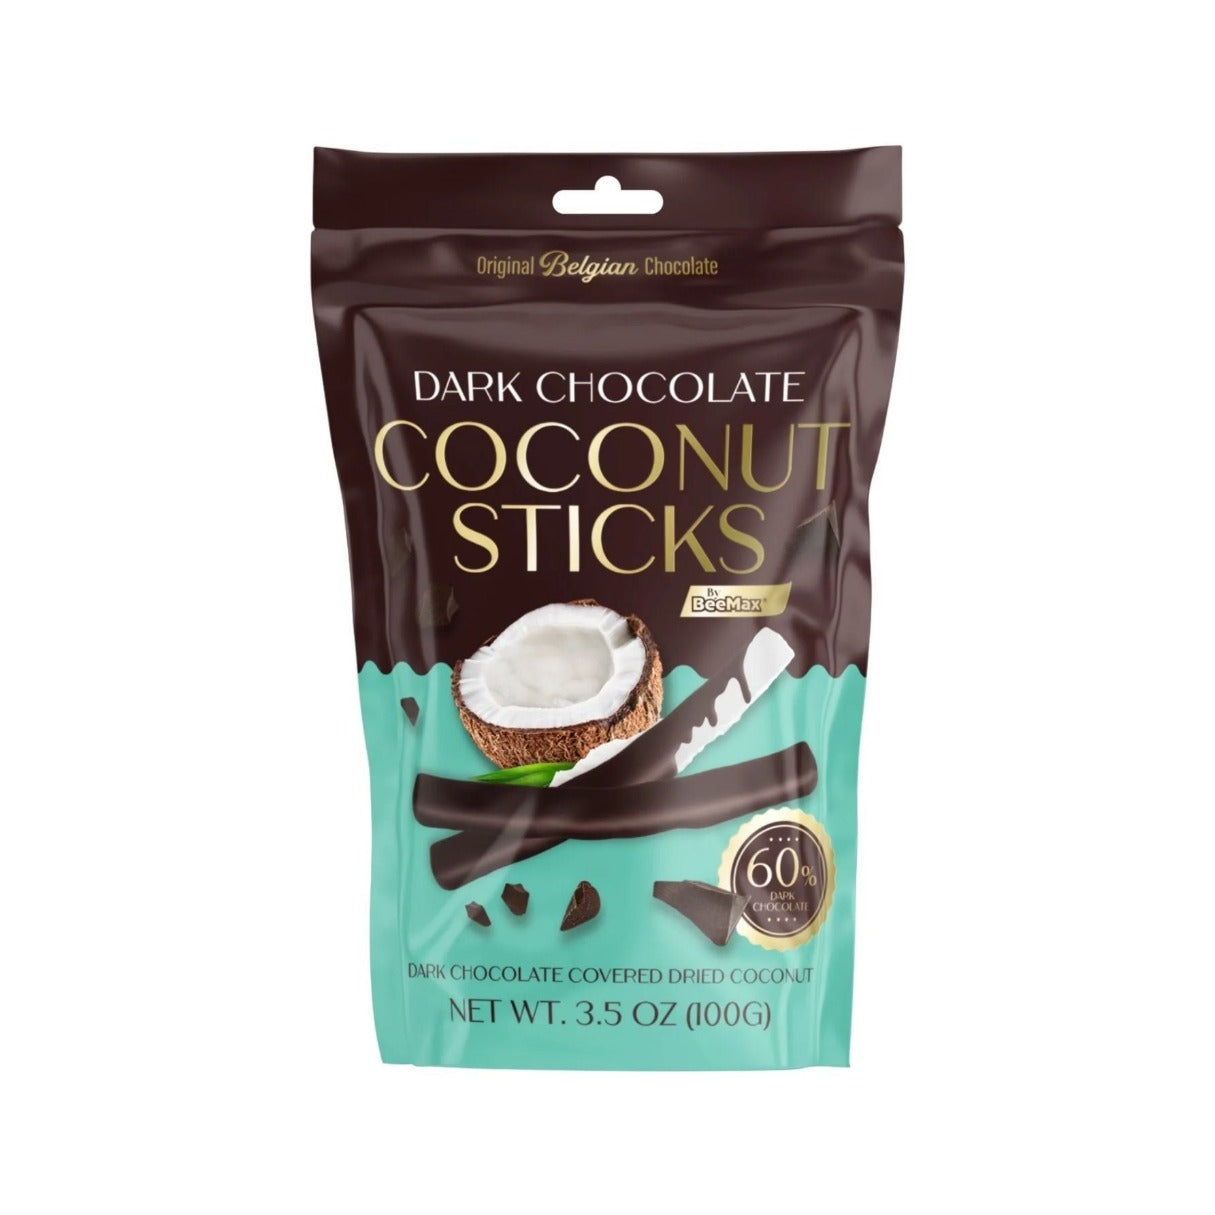 Beemax Dark Chocolate Covered Coconut Sticks 3.5oz - 12ct